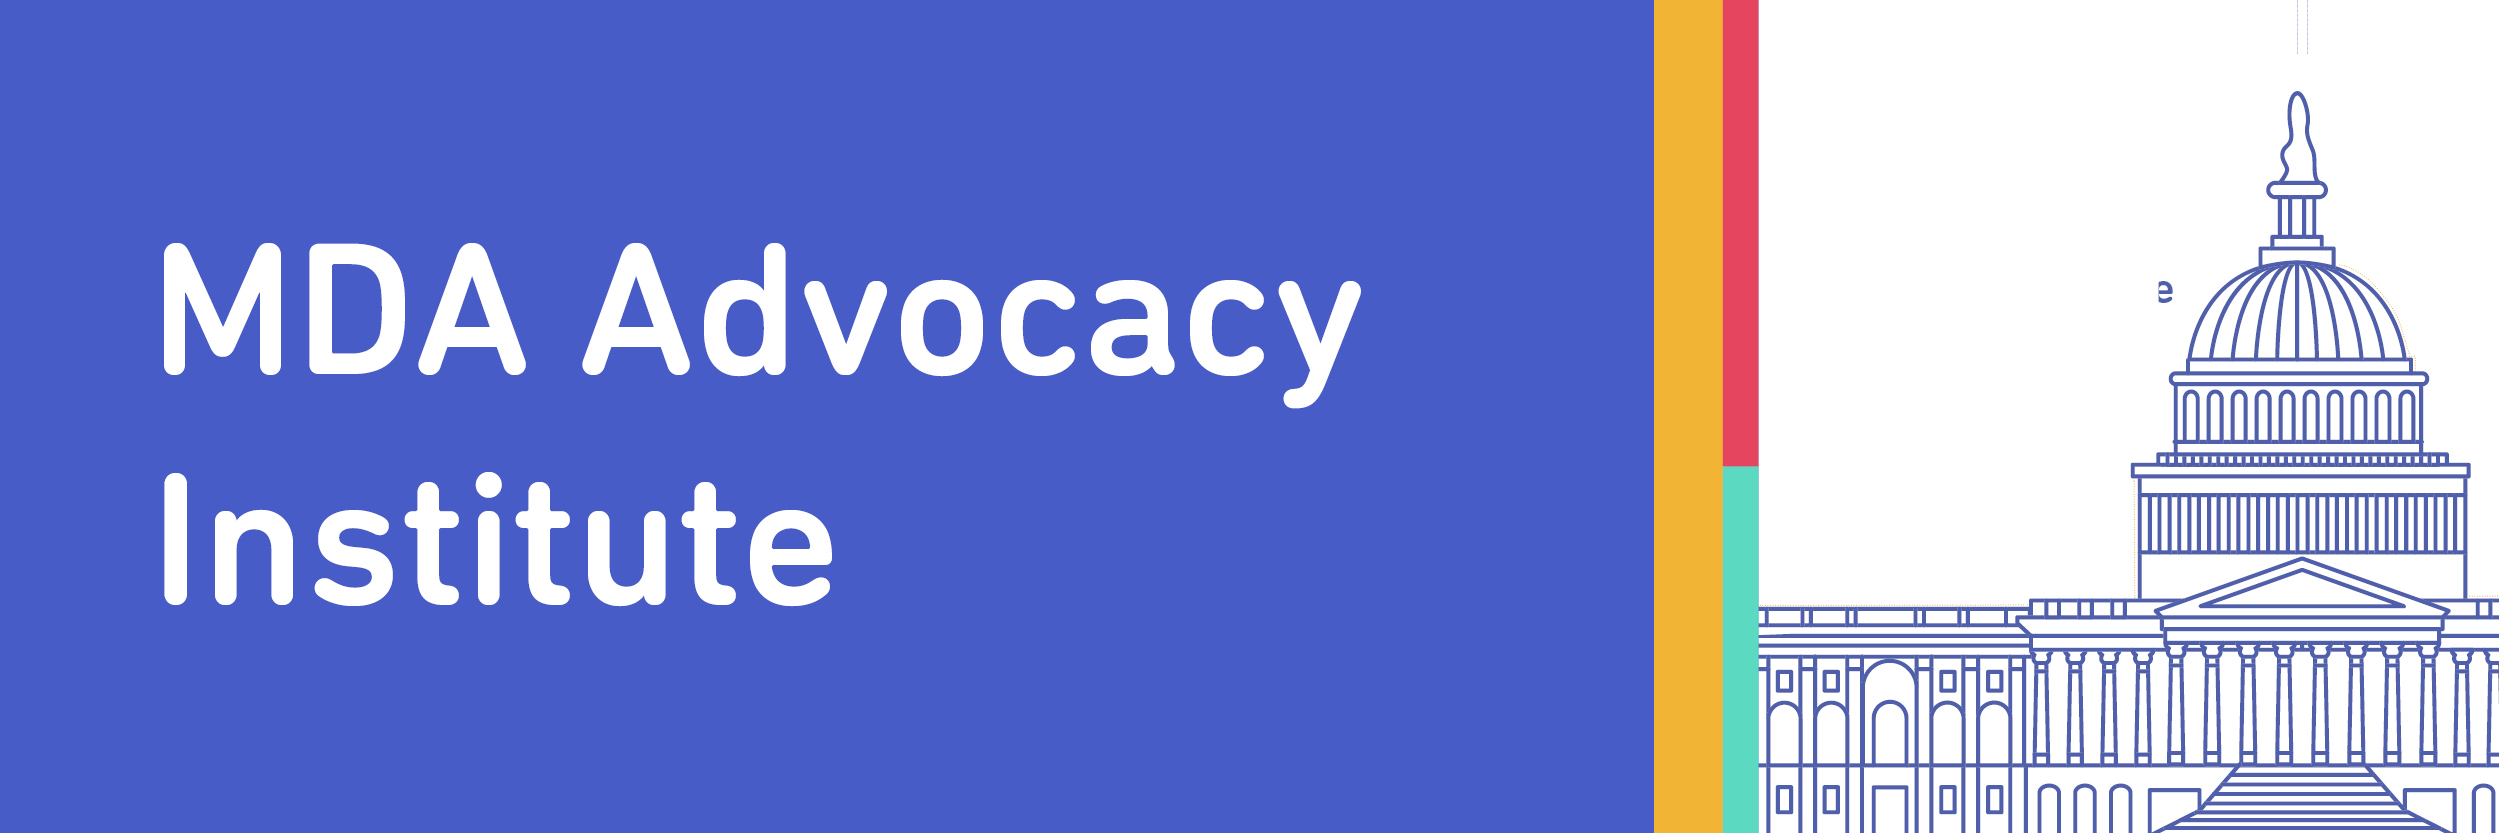 Advocacy Institute: 2020 Year in Review Webinar Dec. 9 